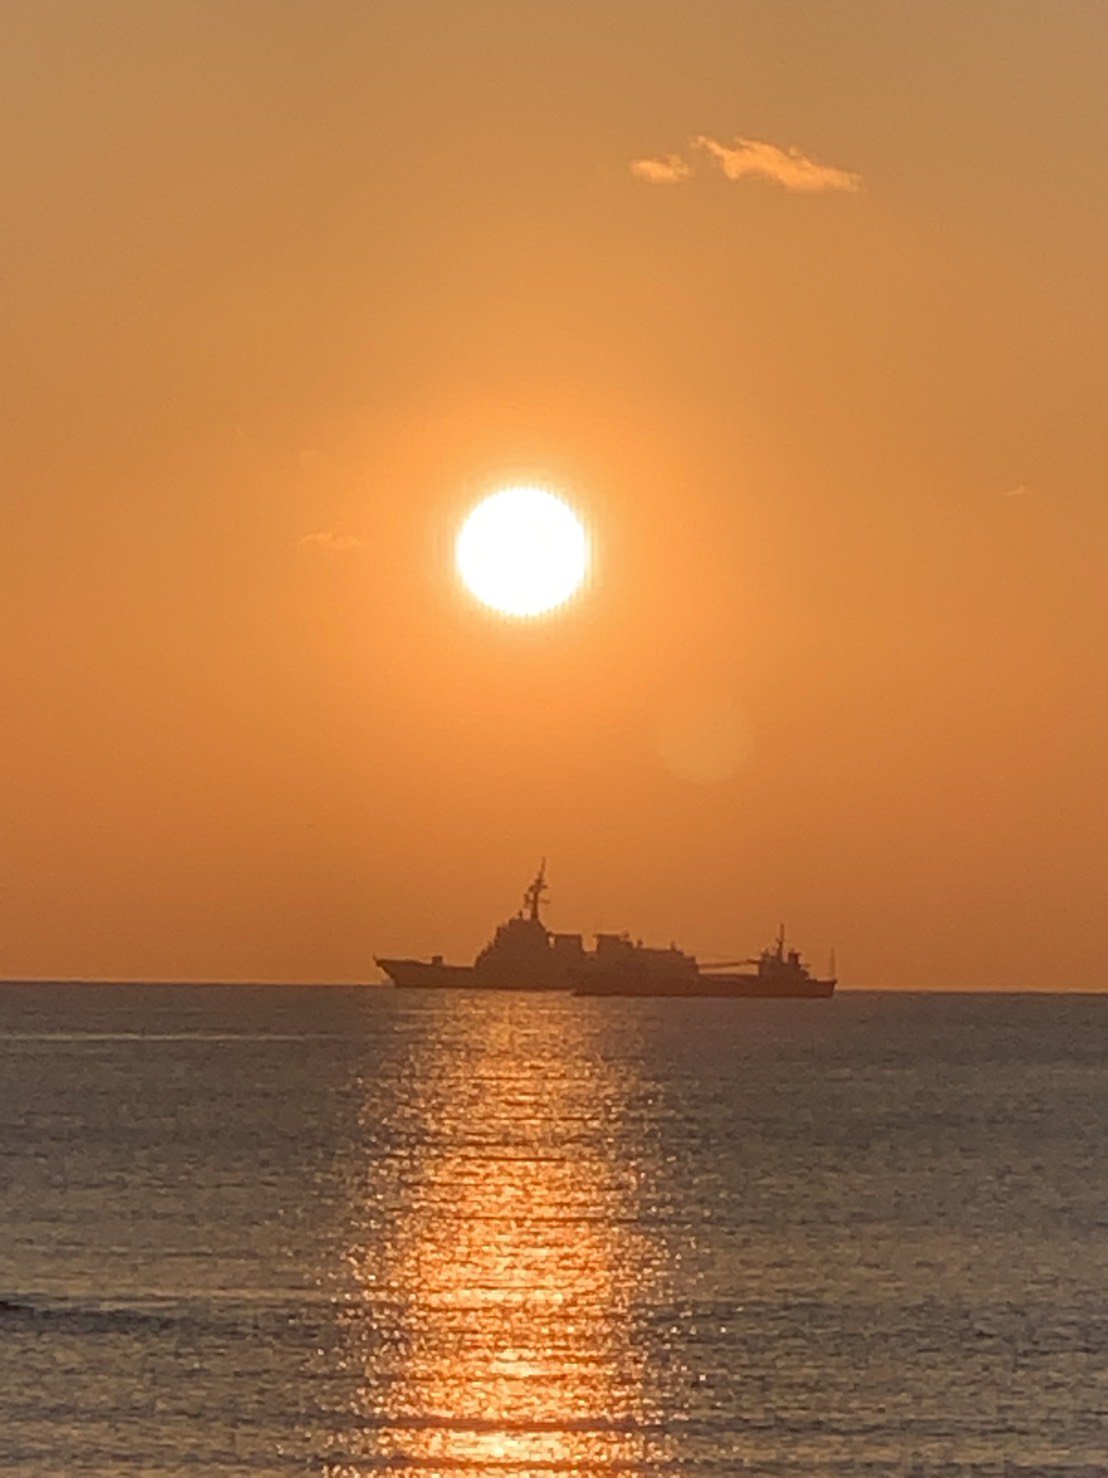 Goodyplan 護衛艦まやが館山港に来ました 館山湾は夕日が綺麗な事ことで有名ですが 護衛艦まやが来たこともあり カメラを持った方がたくさんいました 自衛隊グッズ 護衛艦まや 摩耶 海上自衛隊 T Co Rti35pmixe Twitter